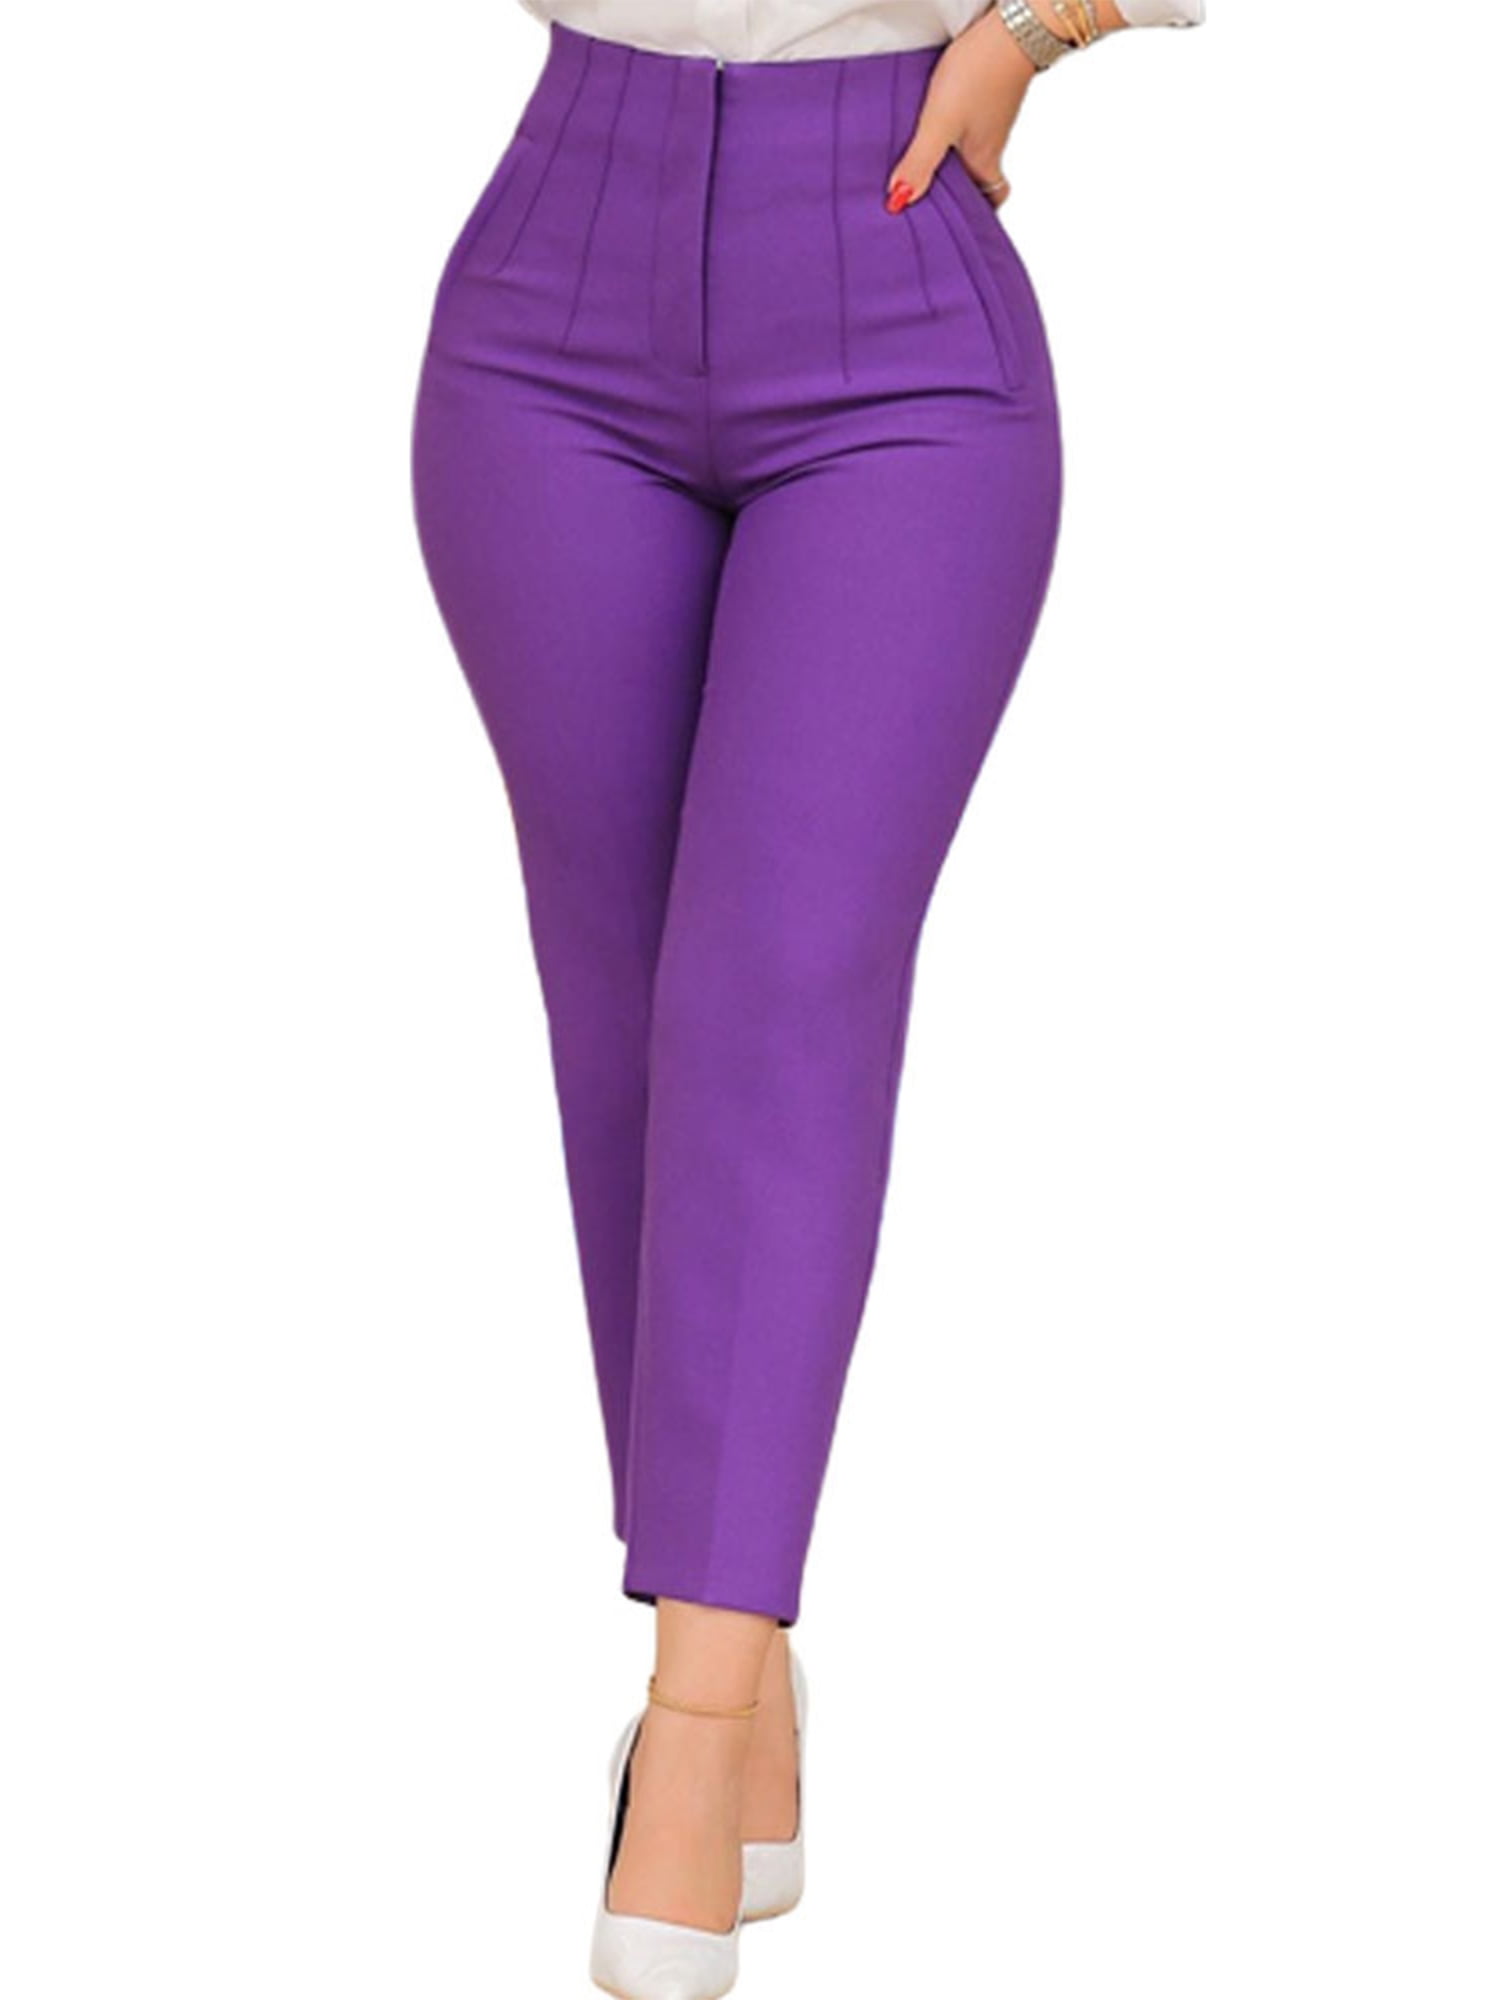 Capreze Dress Pants for Women High Waist Office Work Pant with Pockets  Casual Straight Leg Slacks Business Trousers Purple S